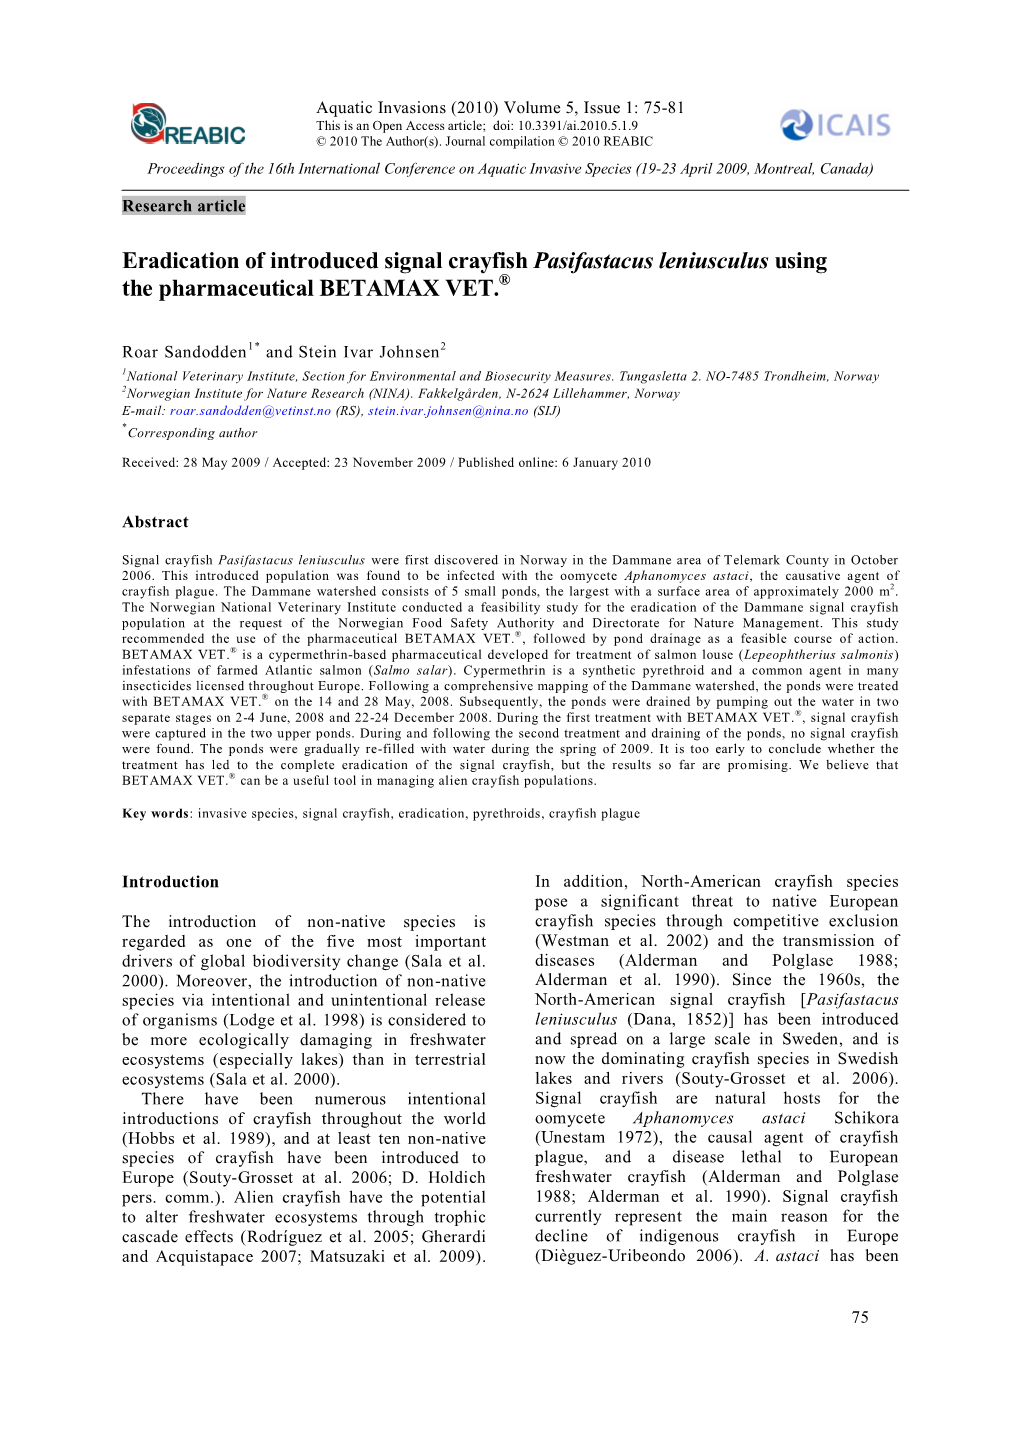 Eradication of Introduced Signal Crayfish Pasifastacus Leniusculus Using the Pharmaceutical BETAMAX VET.®